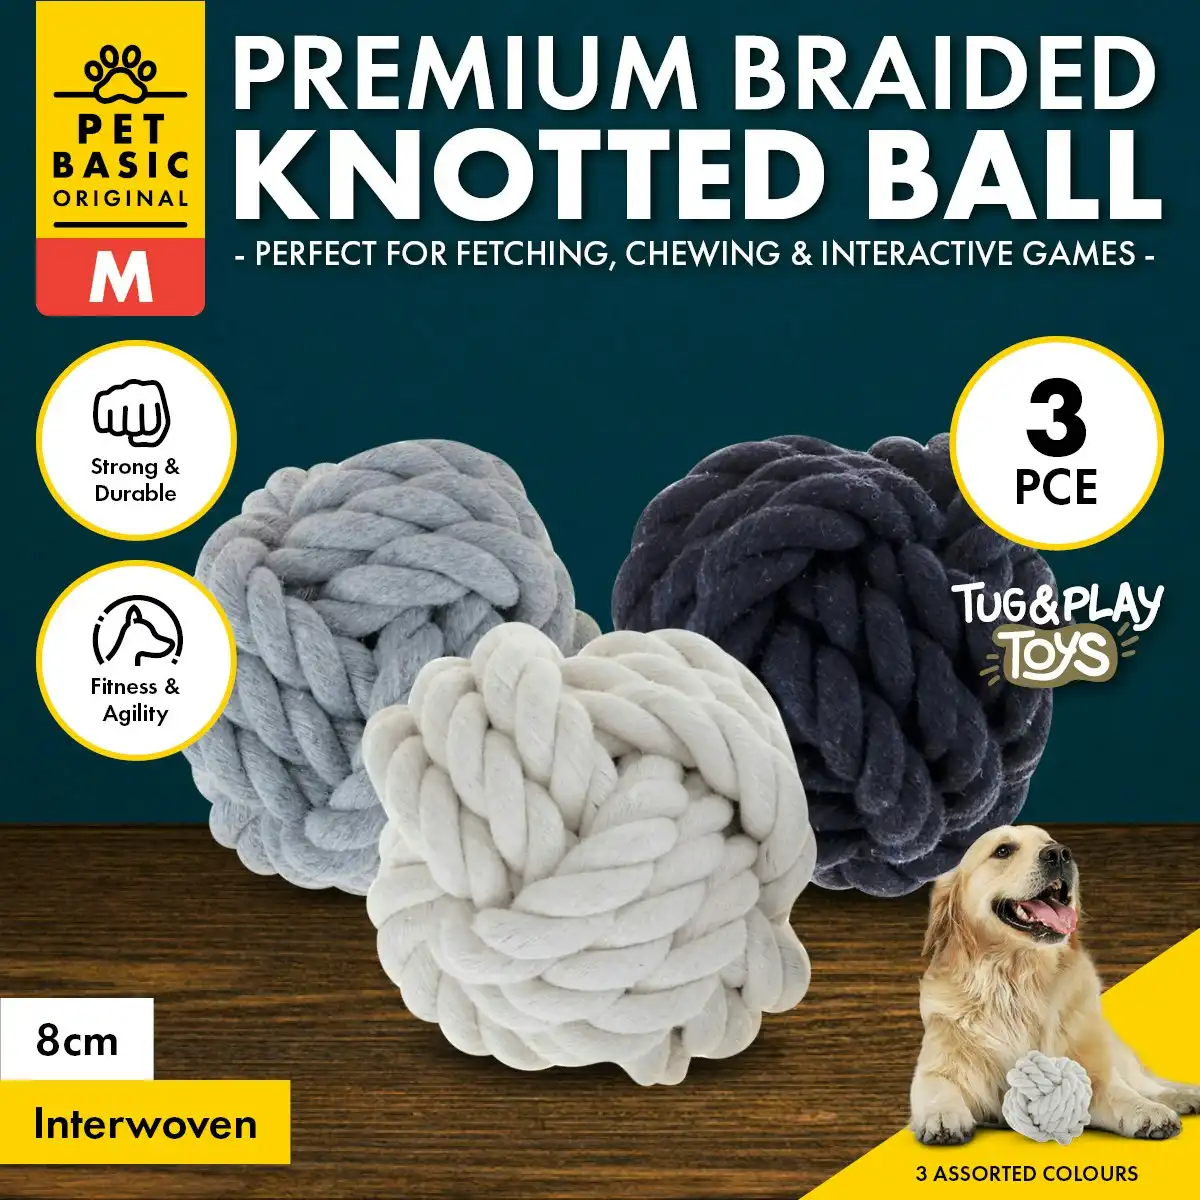 Pet Basic 3PCE Premium Braided Knotted Ball Size Medium Natural Fibres 8cm